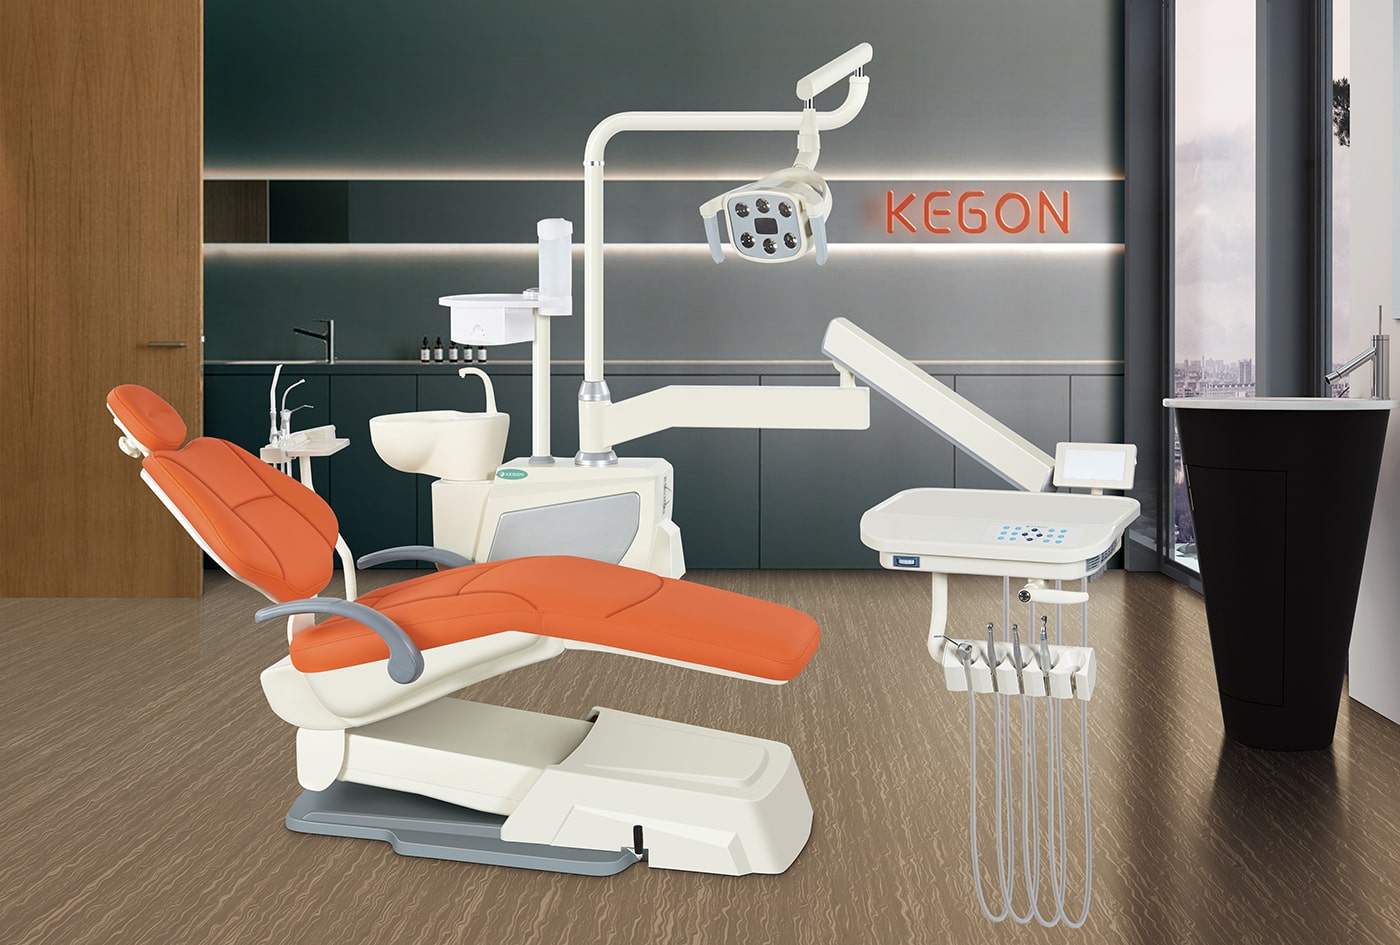 Dental Chair K-808 Champion Type